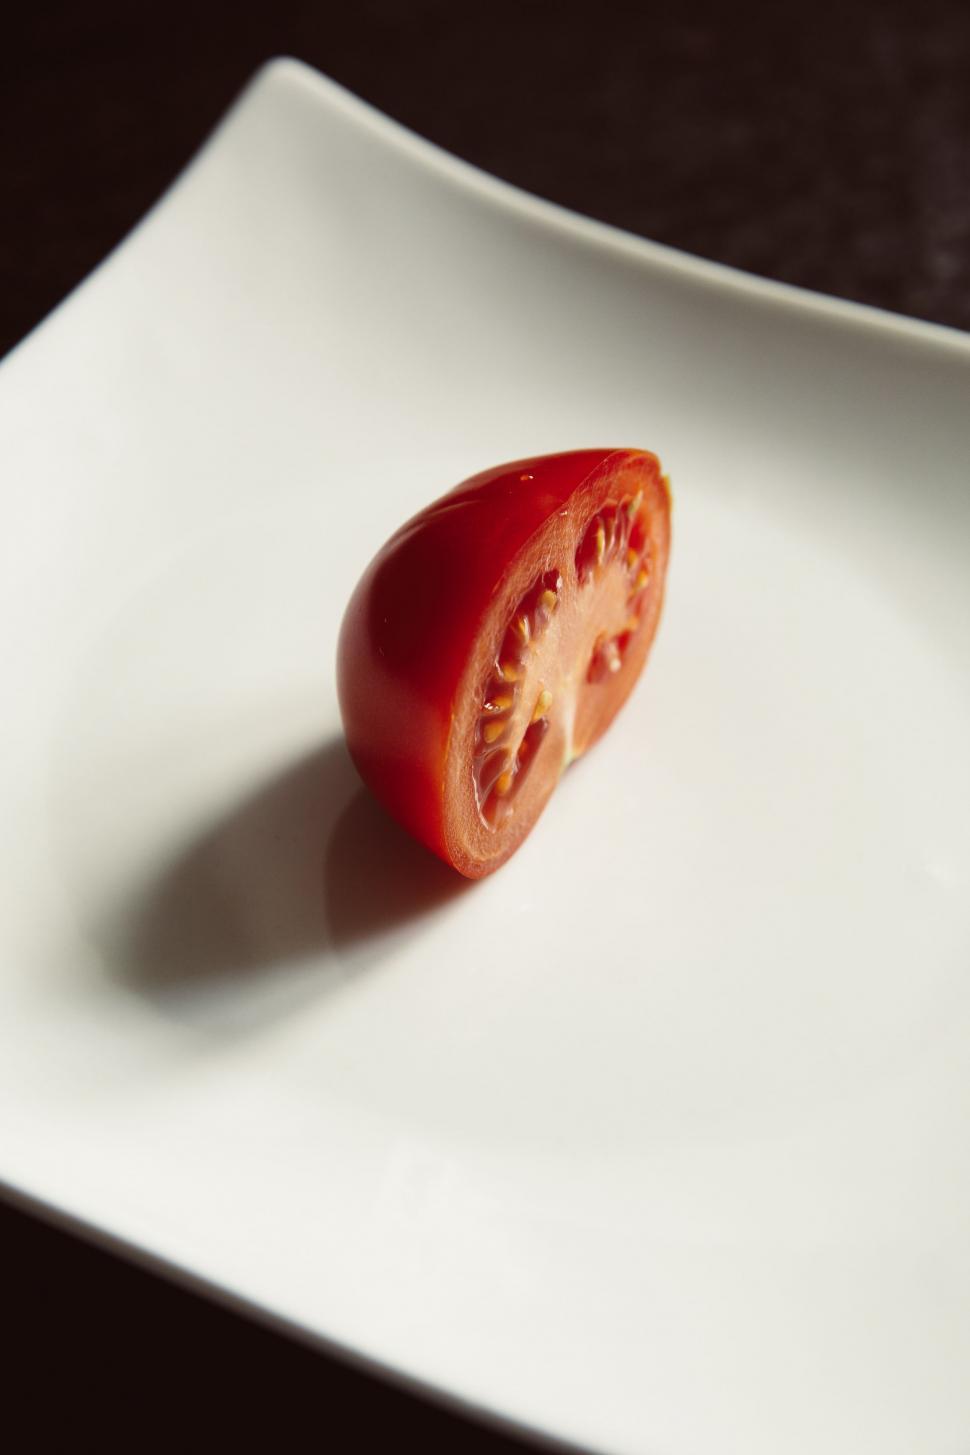 Free Image of Sliced Tomato  